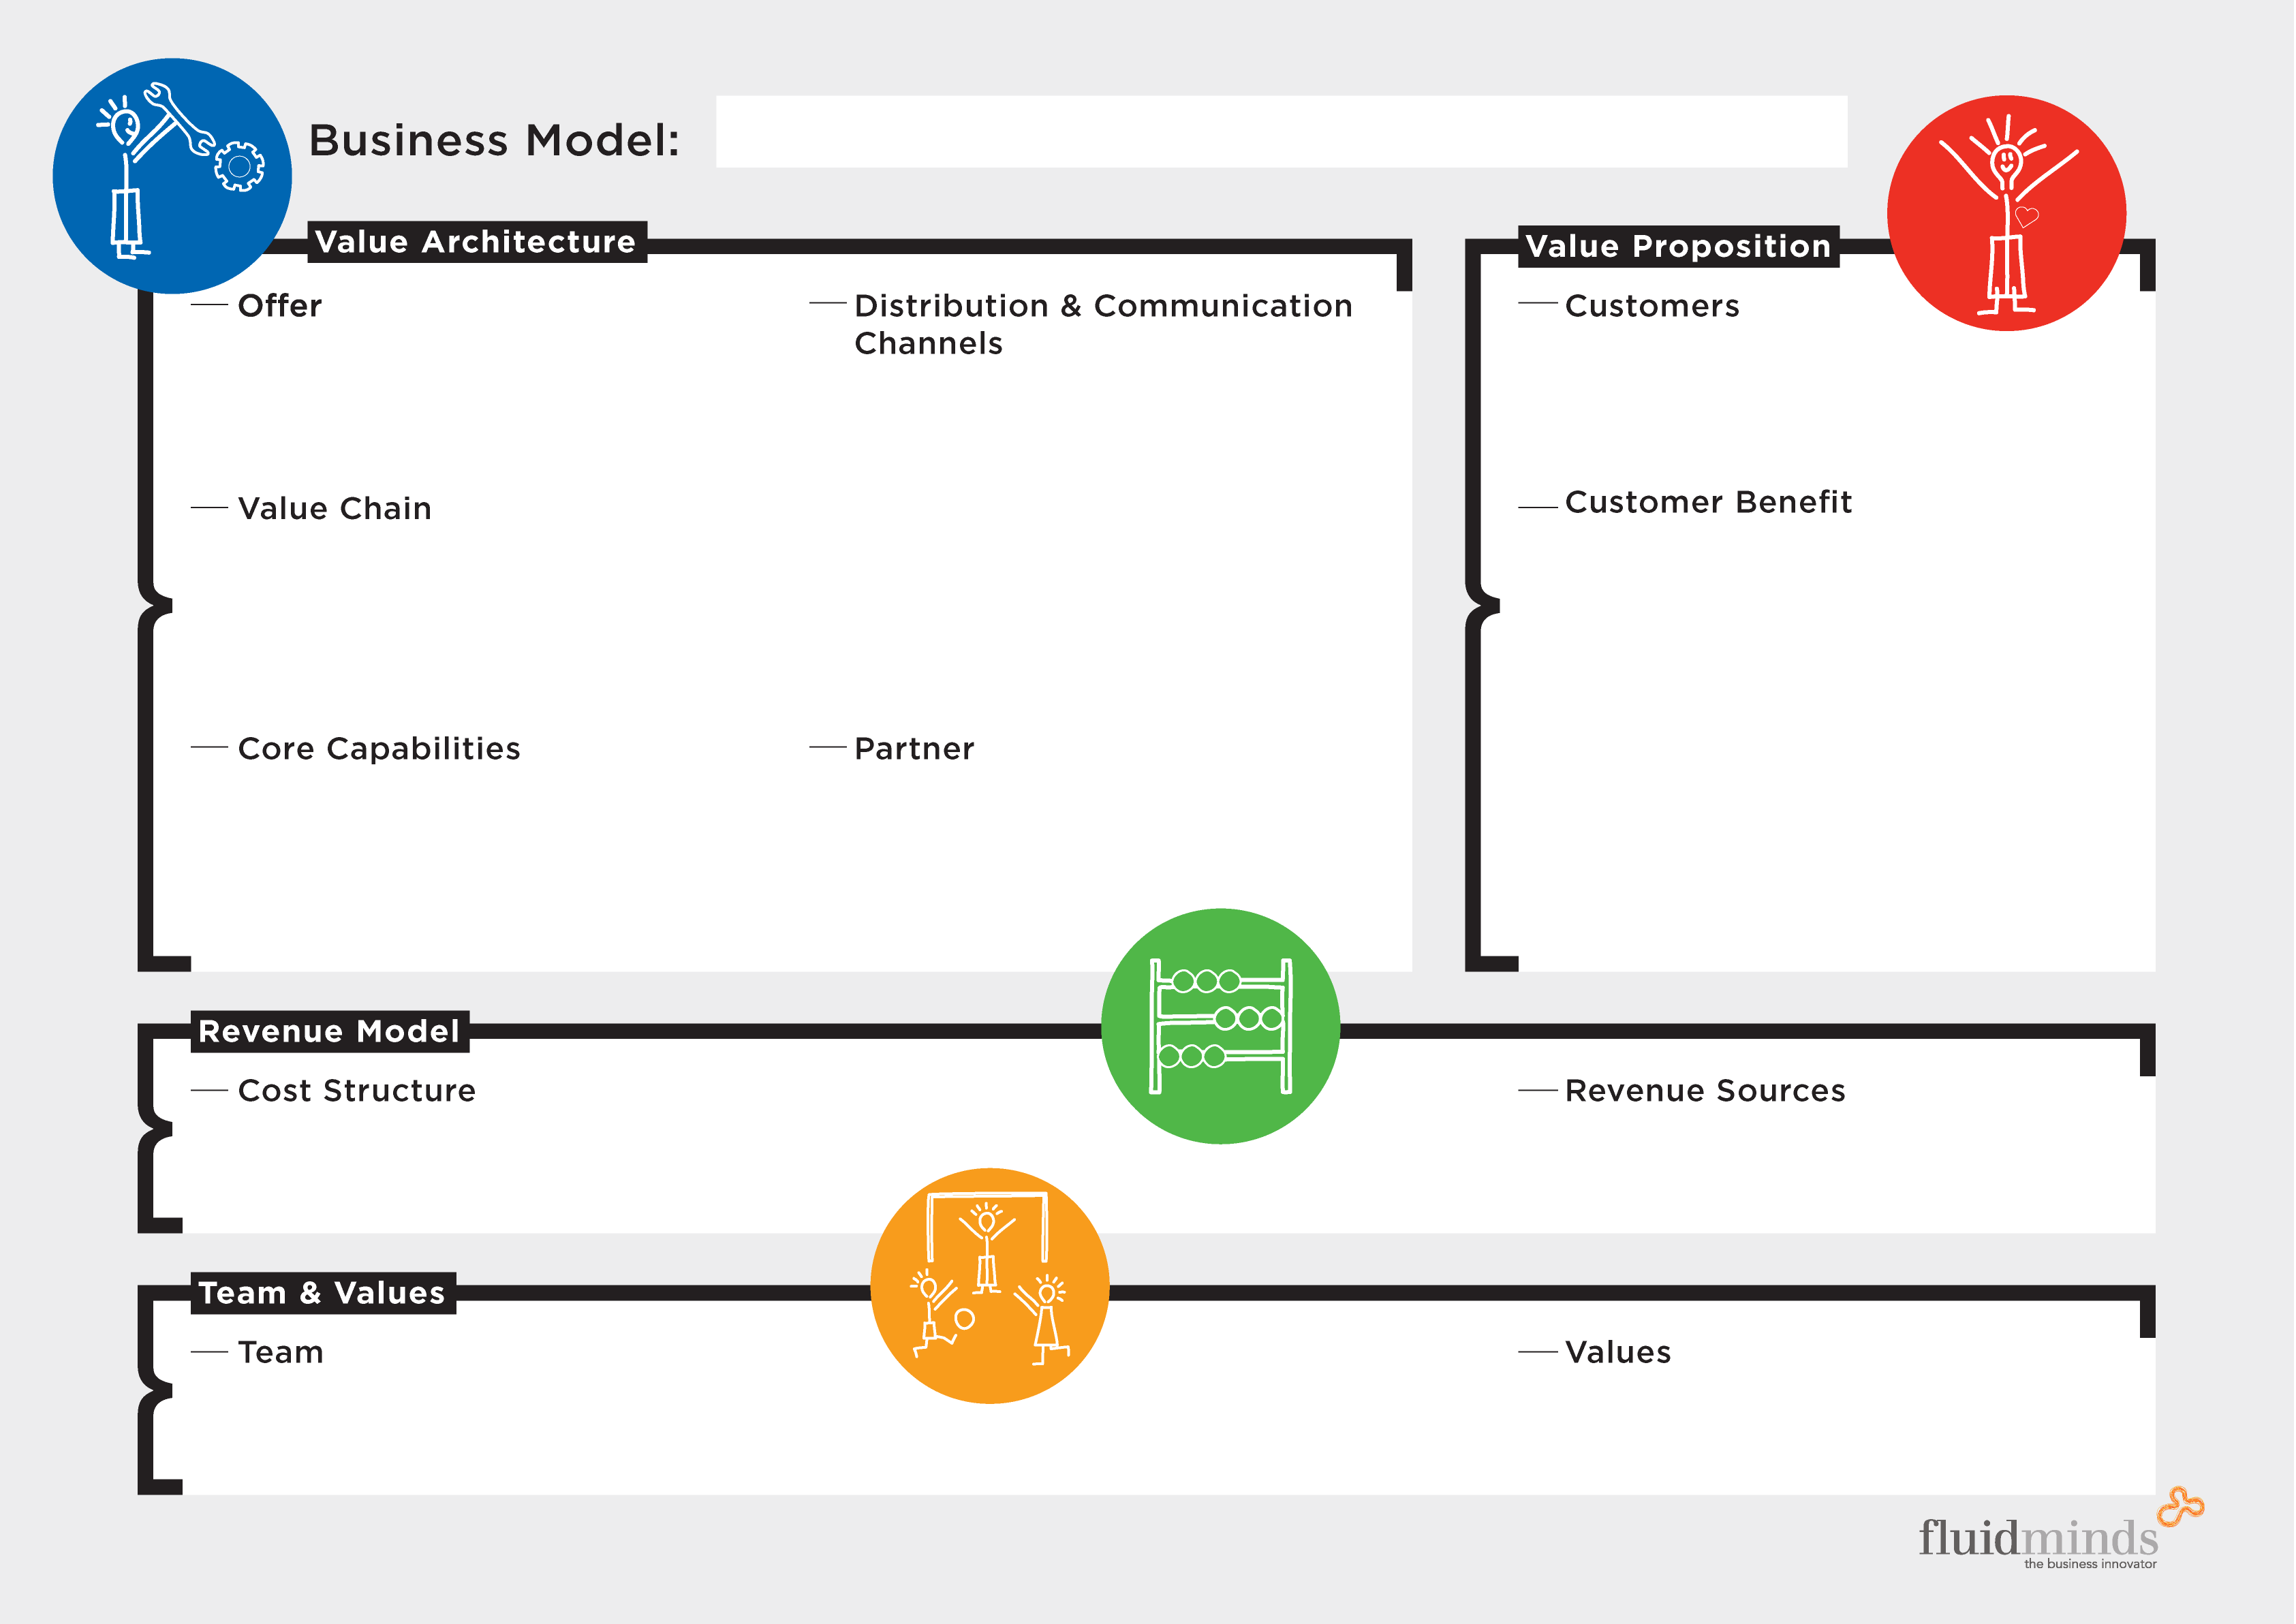 groupon business model pdf